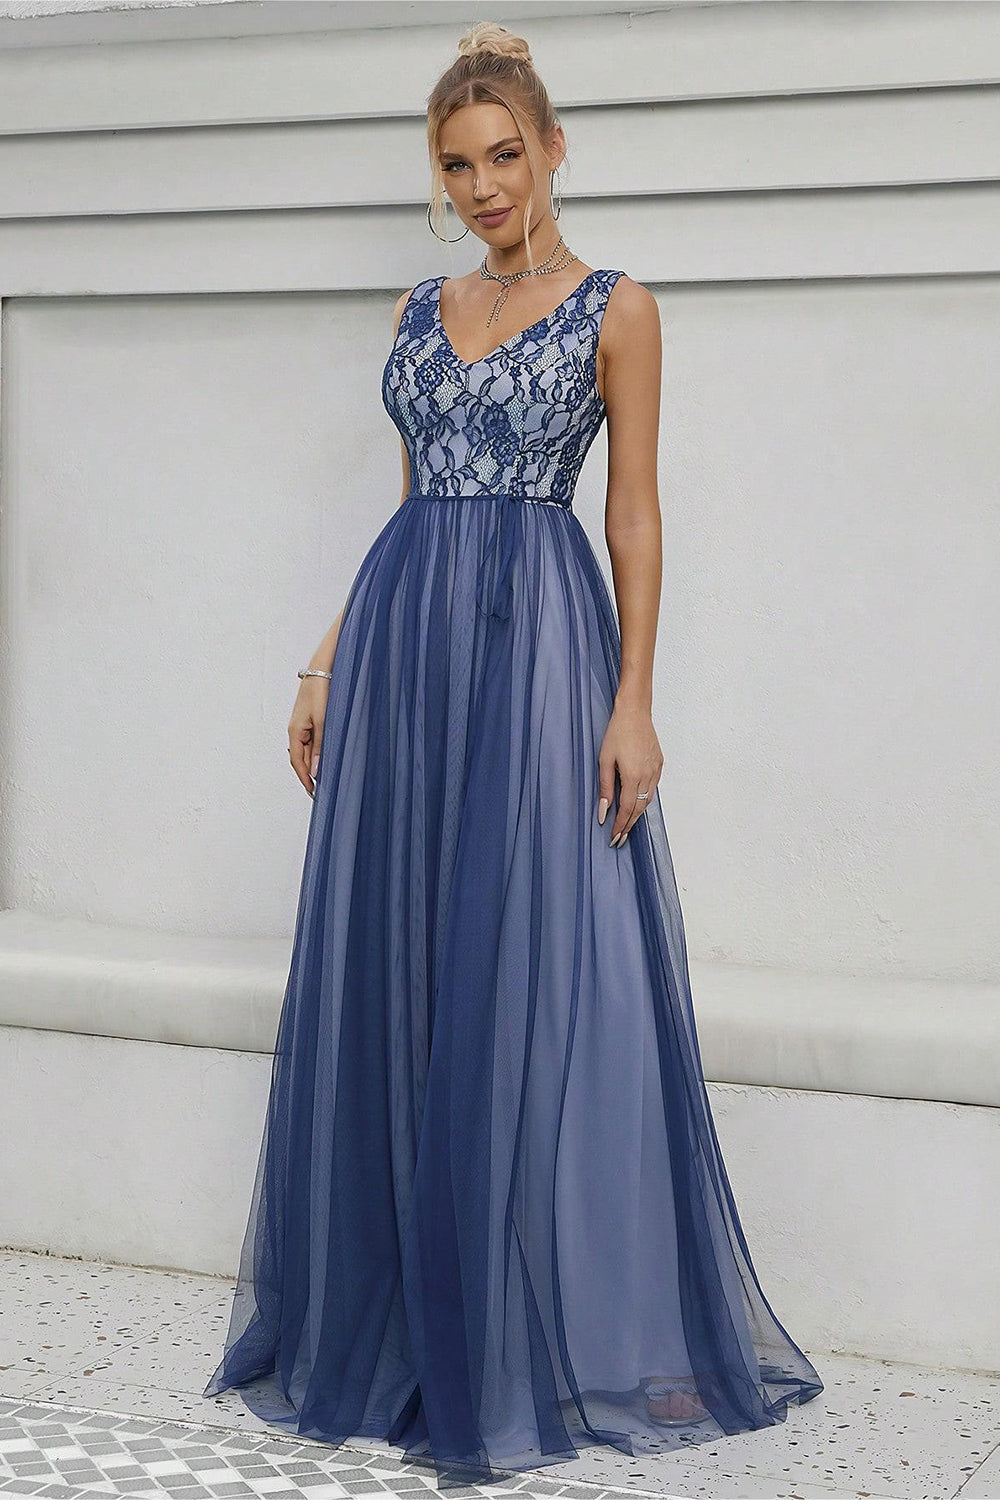 Blue A-Line V-Neck Long Prom Dress